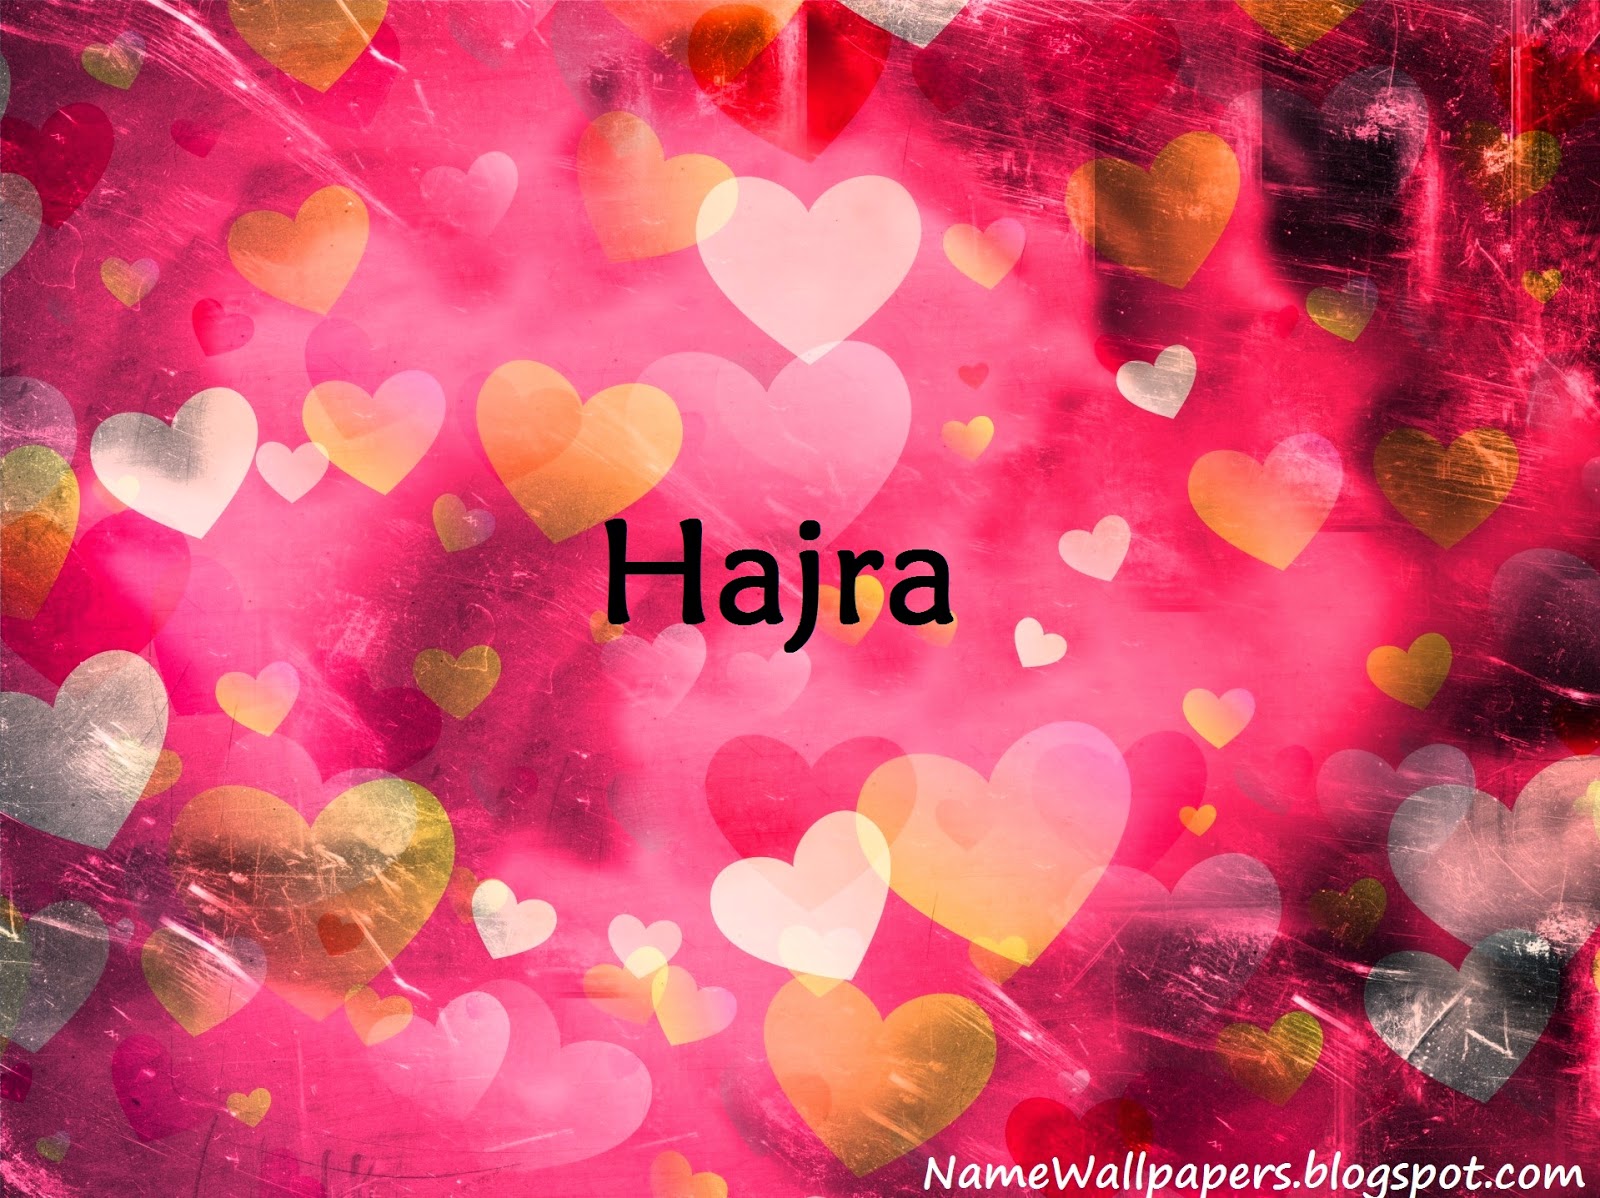 hajra name wallpaper,herz,rosa,valentinstag,liebe,muster